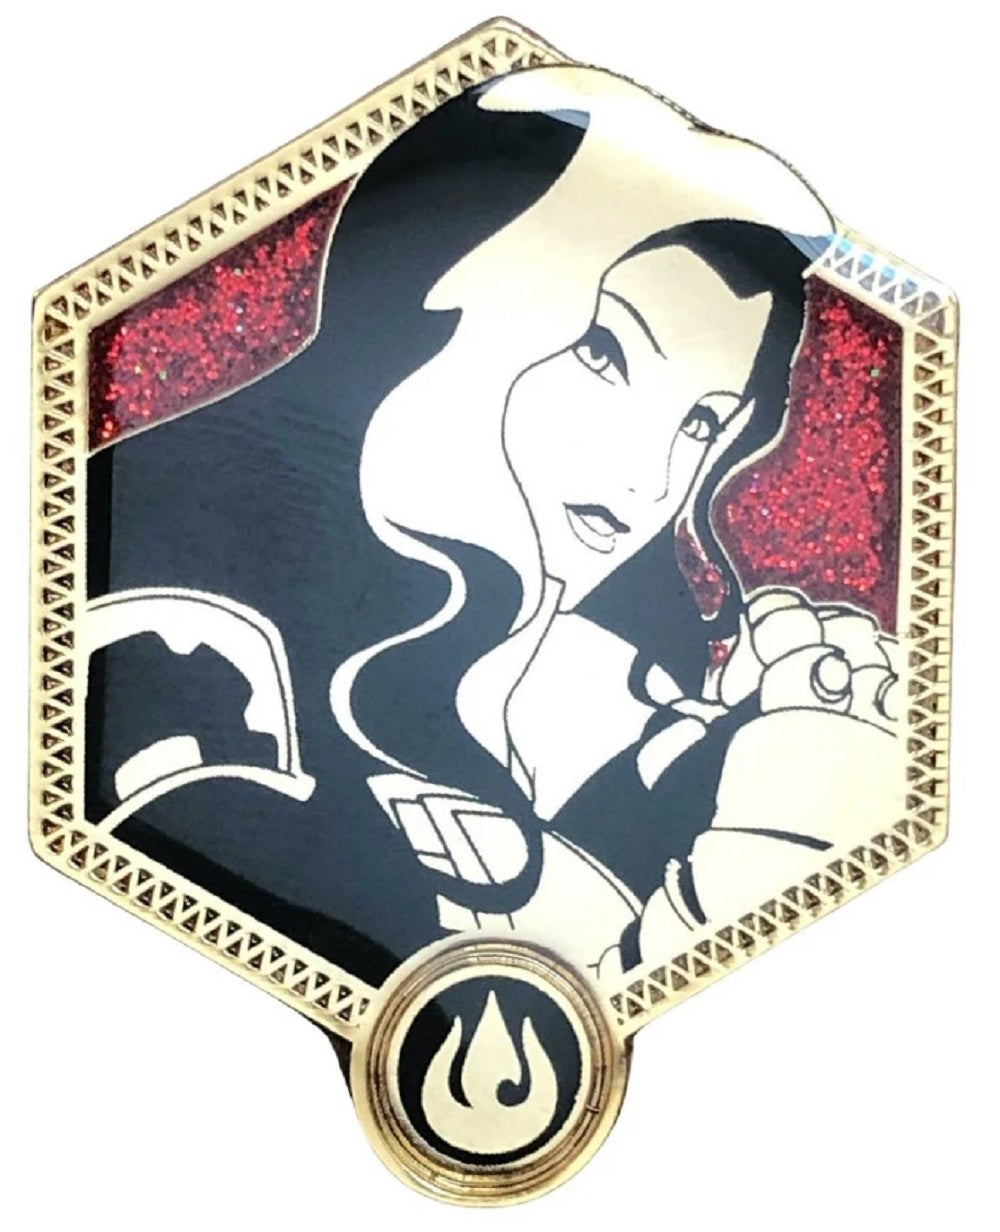 Legend of Korra Golden Asami Collectible Enamel Pin